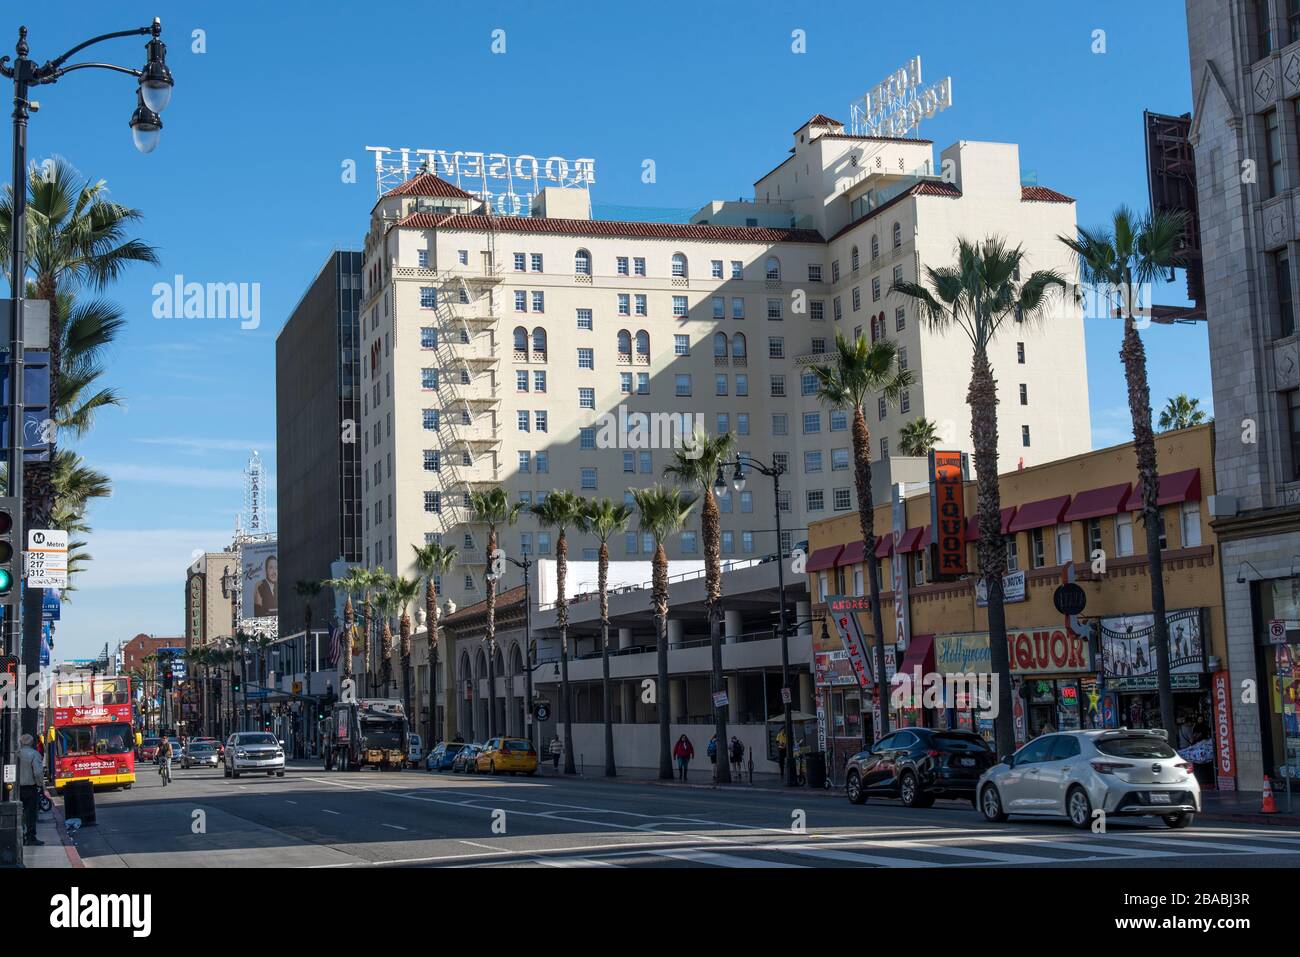 HOLLYWOOD, CA/USA - 27 JANVIER 2020: L'hôtel Hollywood Roosevelt sur le Walk of Fame où Marilyn Monroe vivait autrefois Banque D'Images